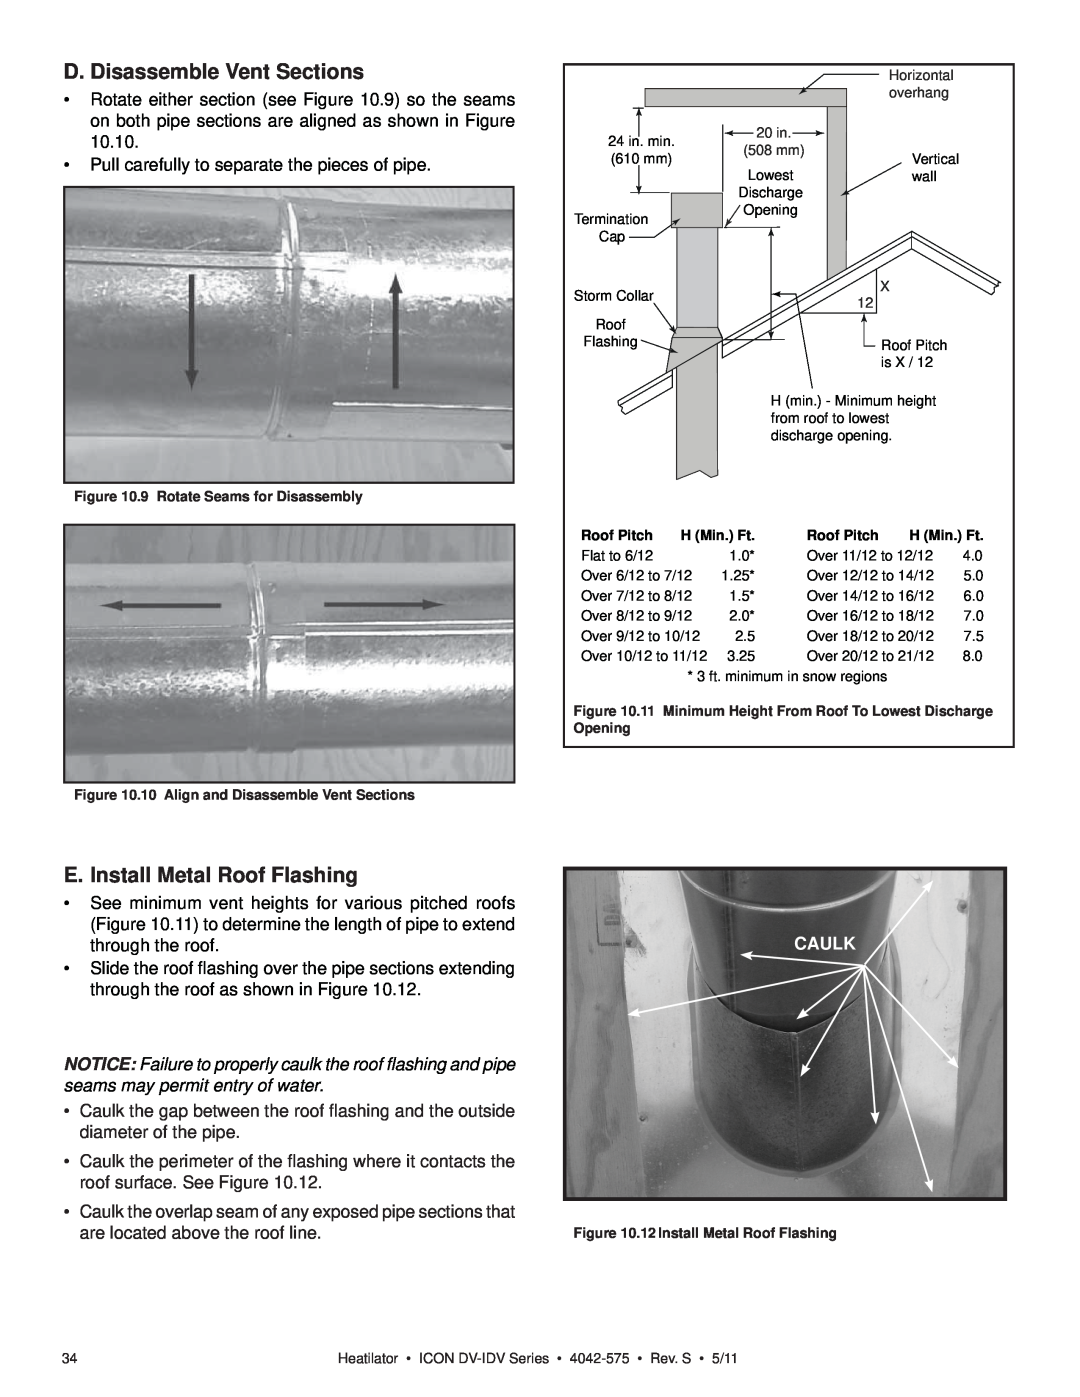 Heatiator IDV4833IT owner manual D. Disassemble Vent Sections, E. Install Metal Roof Flashing, Caulk 